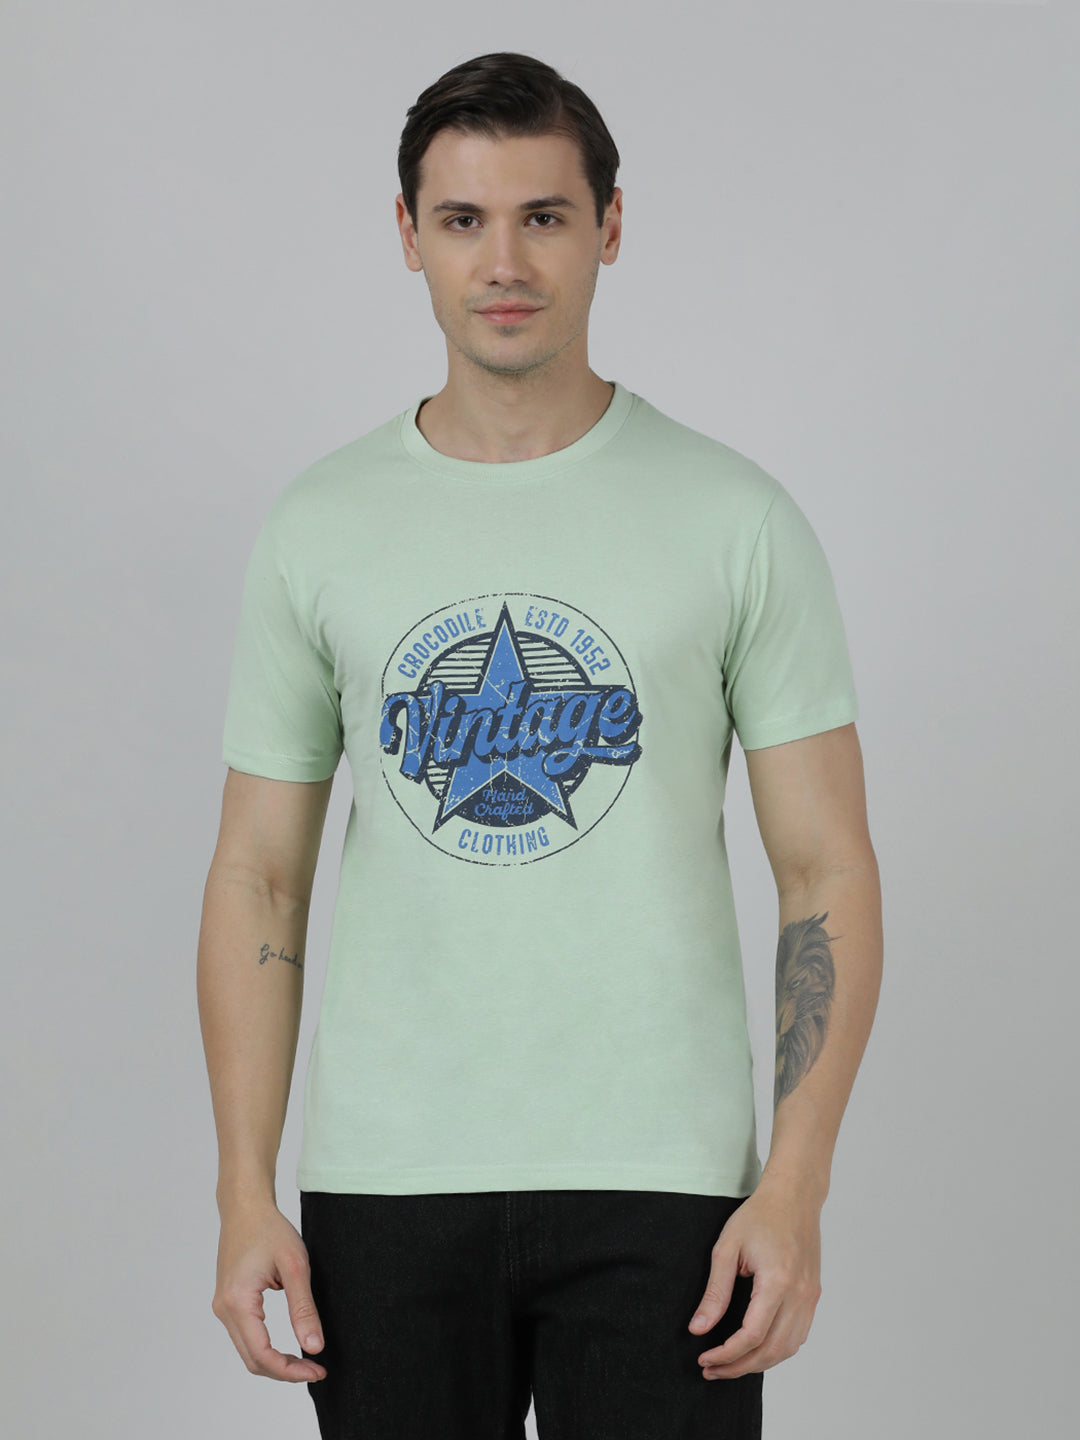 Men's Printed Round Neck Half Sleeve Cotton T-Shirt - NAVY/CELADON GREEN